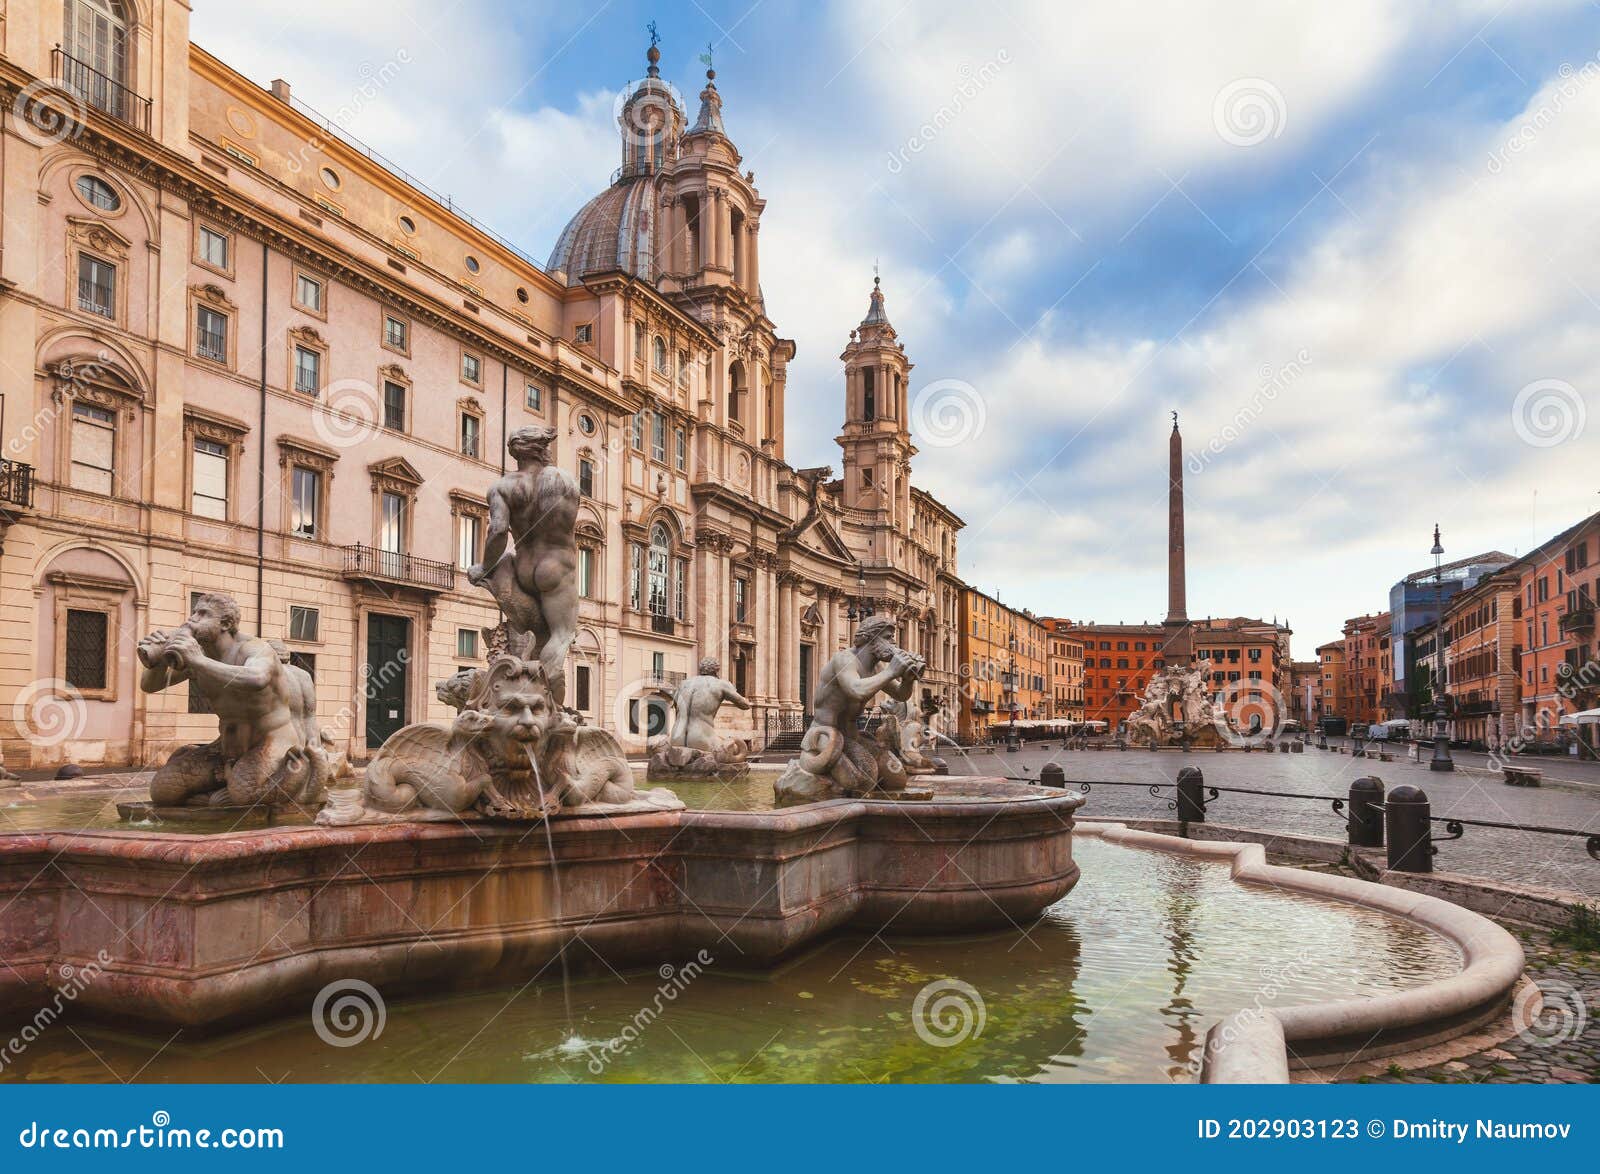 Fontana Del Moro at Piazza Navona Rome Italy Stock Image - Image of ...